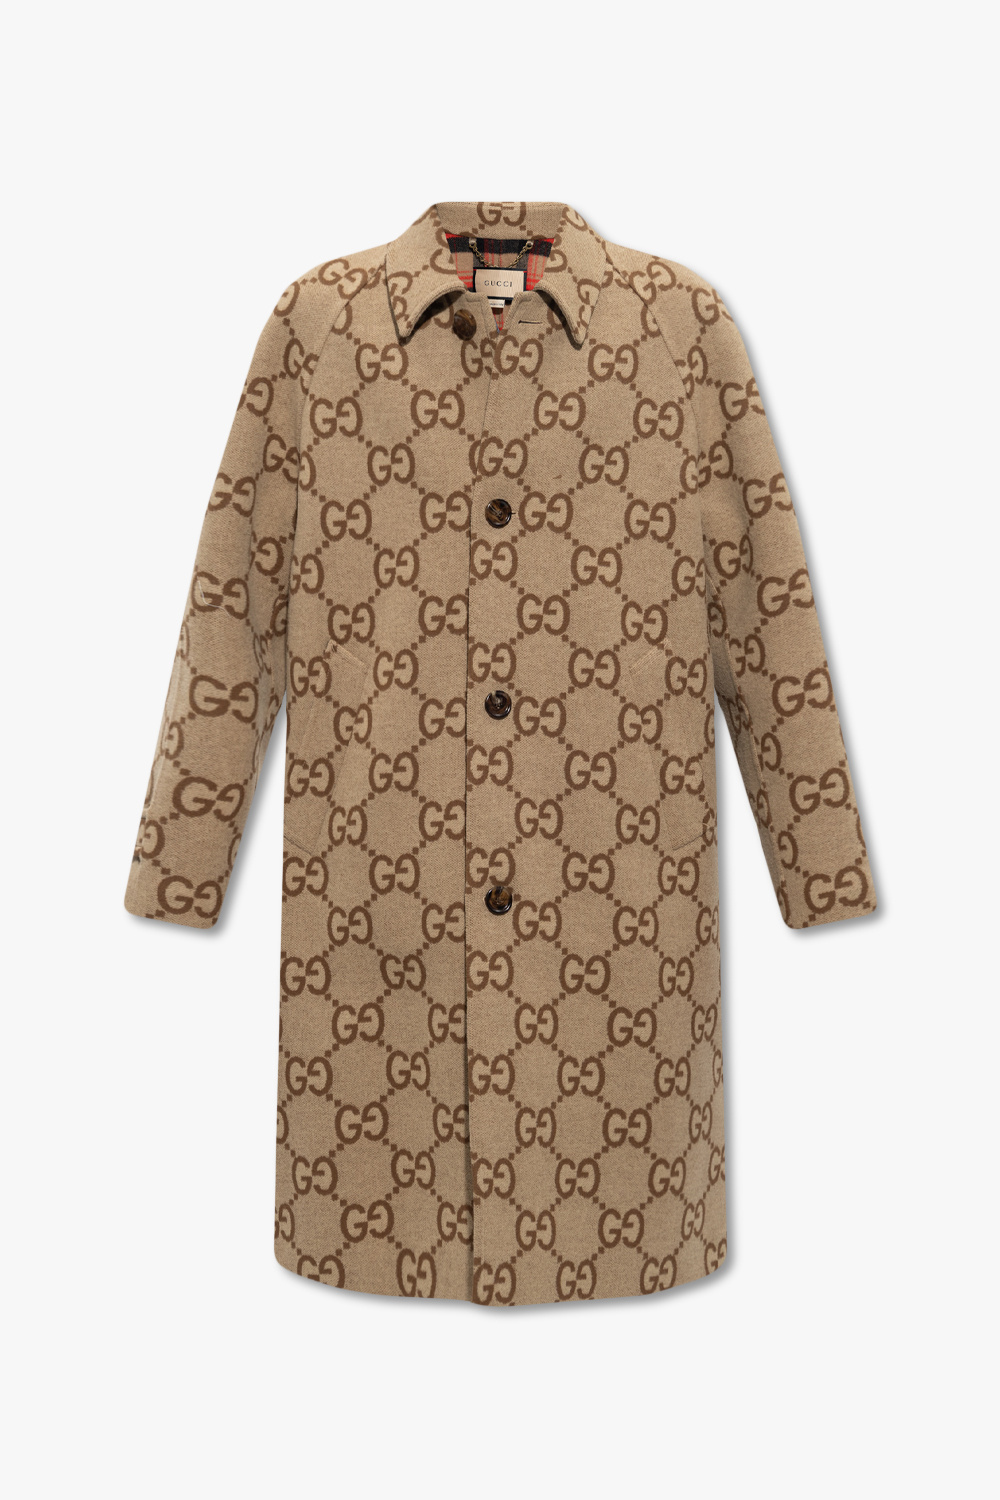 Gucci, Jackets & Coats, Gucci Kids Girls Coat Size 8 Gucci Monogram Print  Double Breasted Coat